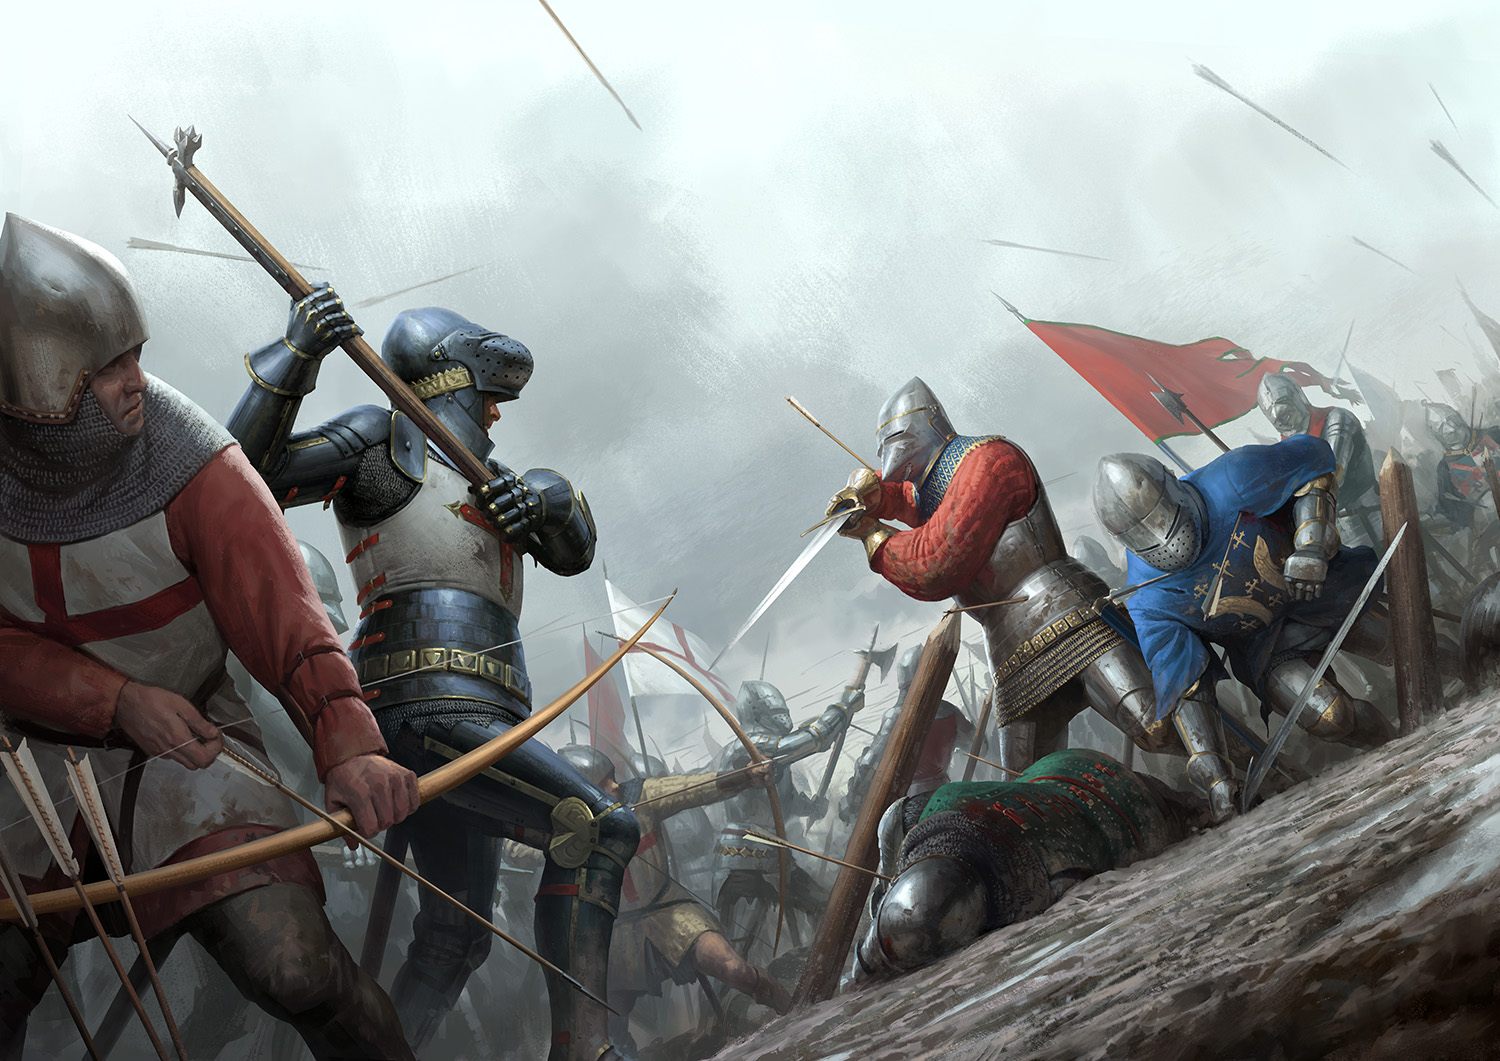 Battle Of Agincourt By WraitHDt